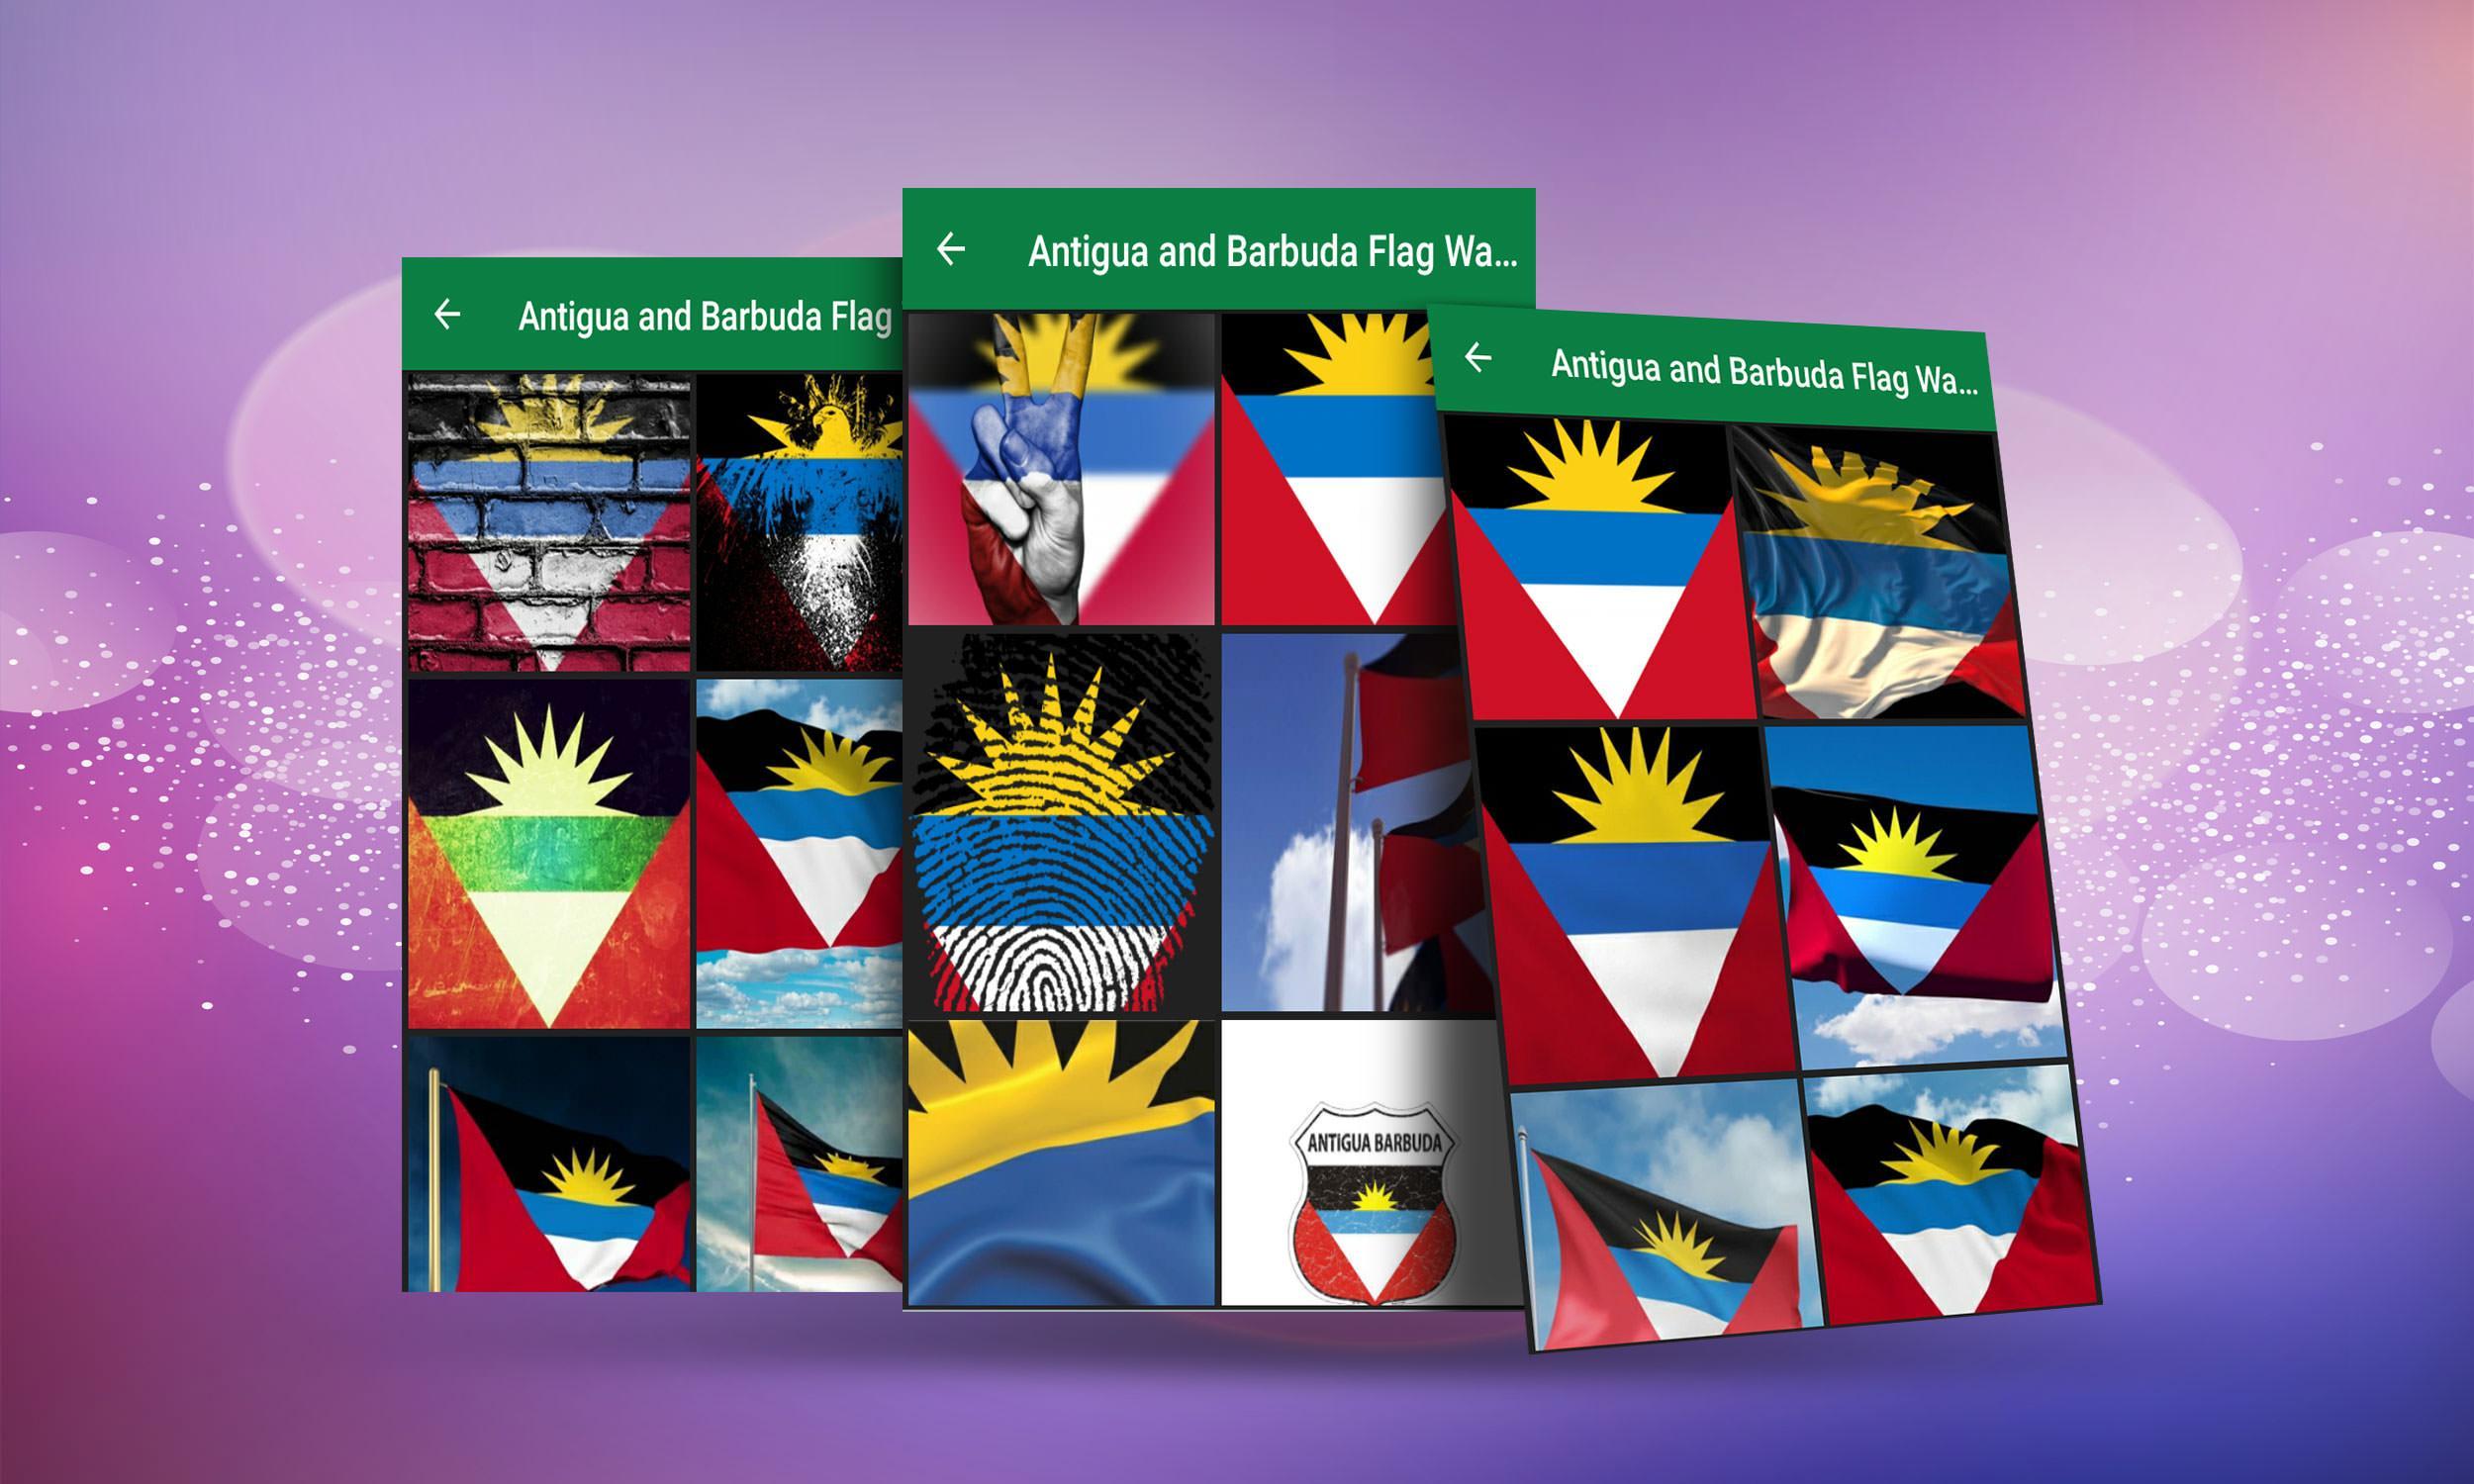 Antigua Barbuda Flag Wallpaper For Android Apk